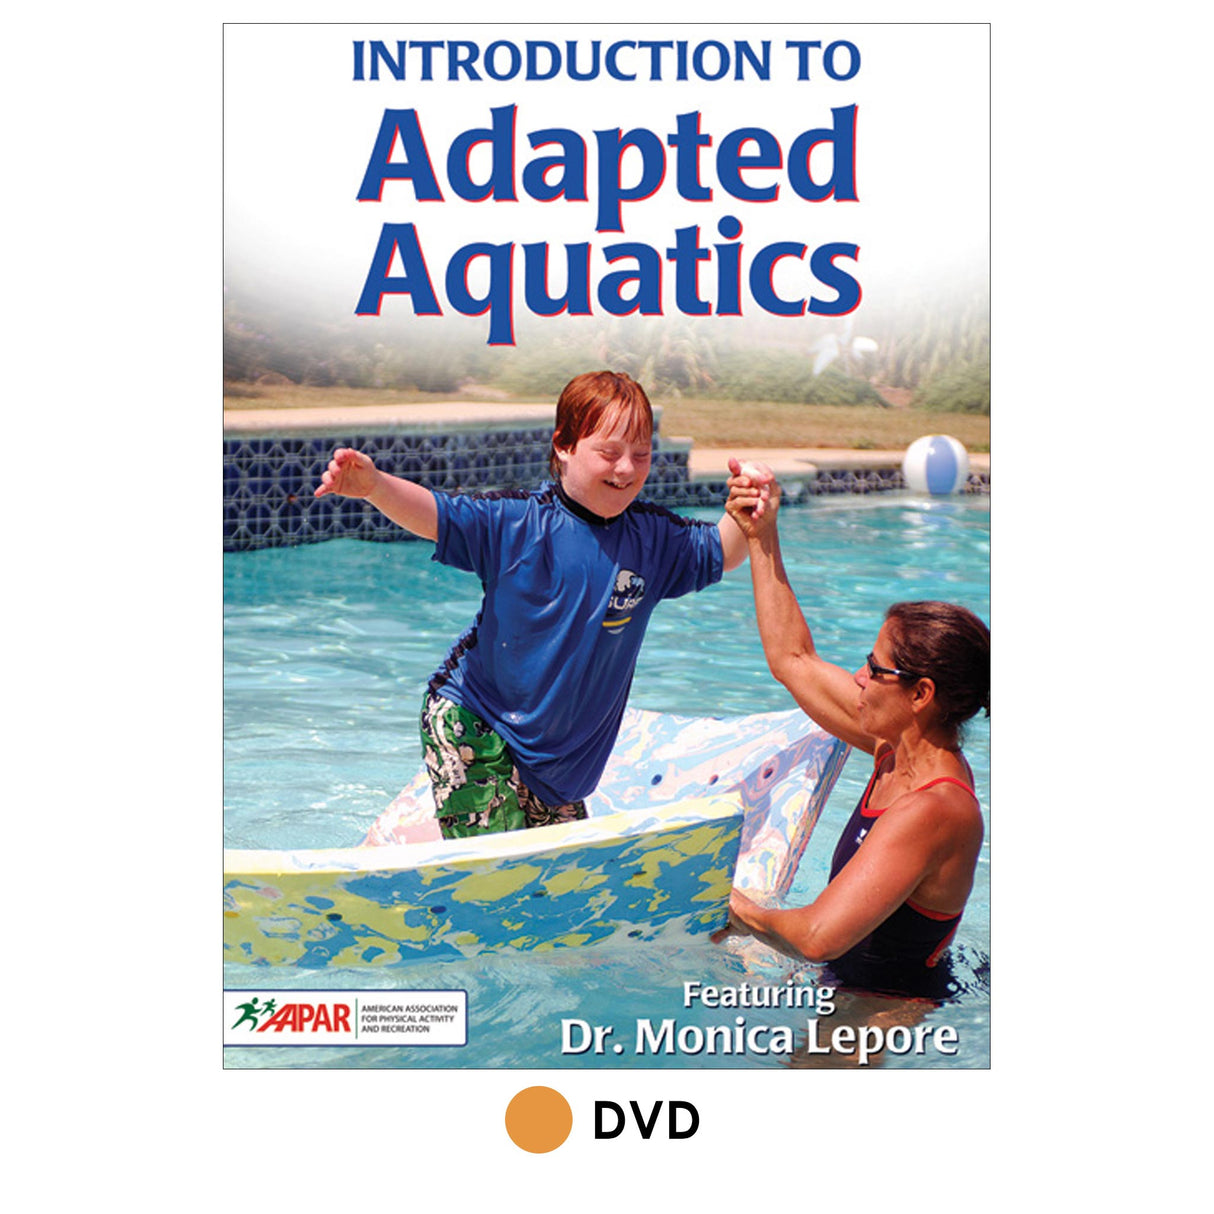 Introduction to Adapted Aquatics DVD